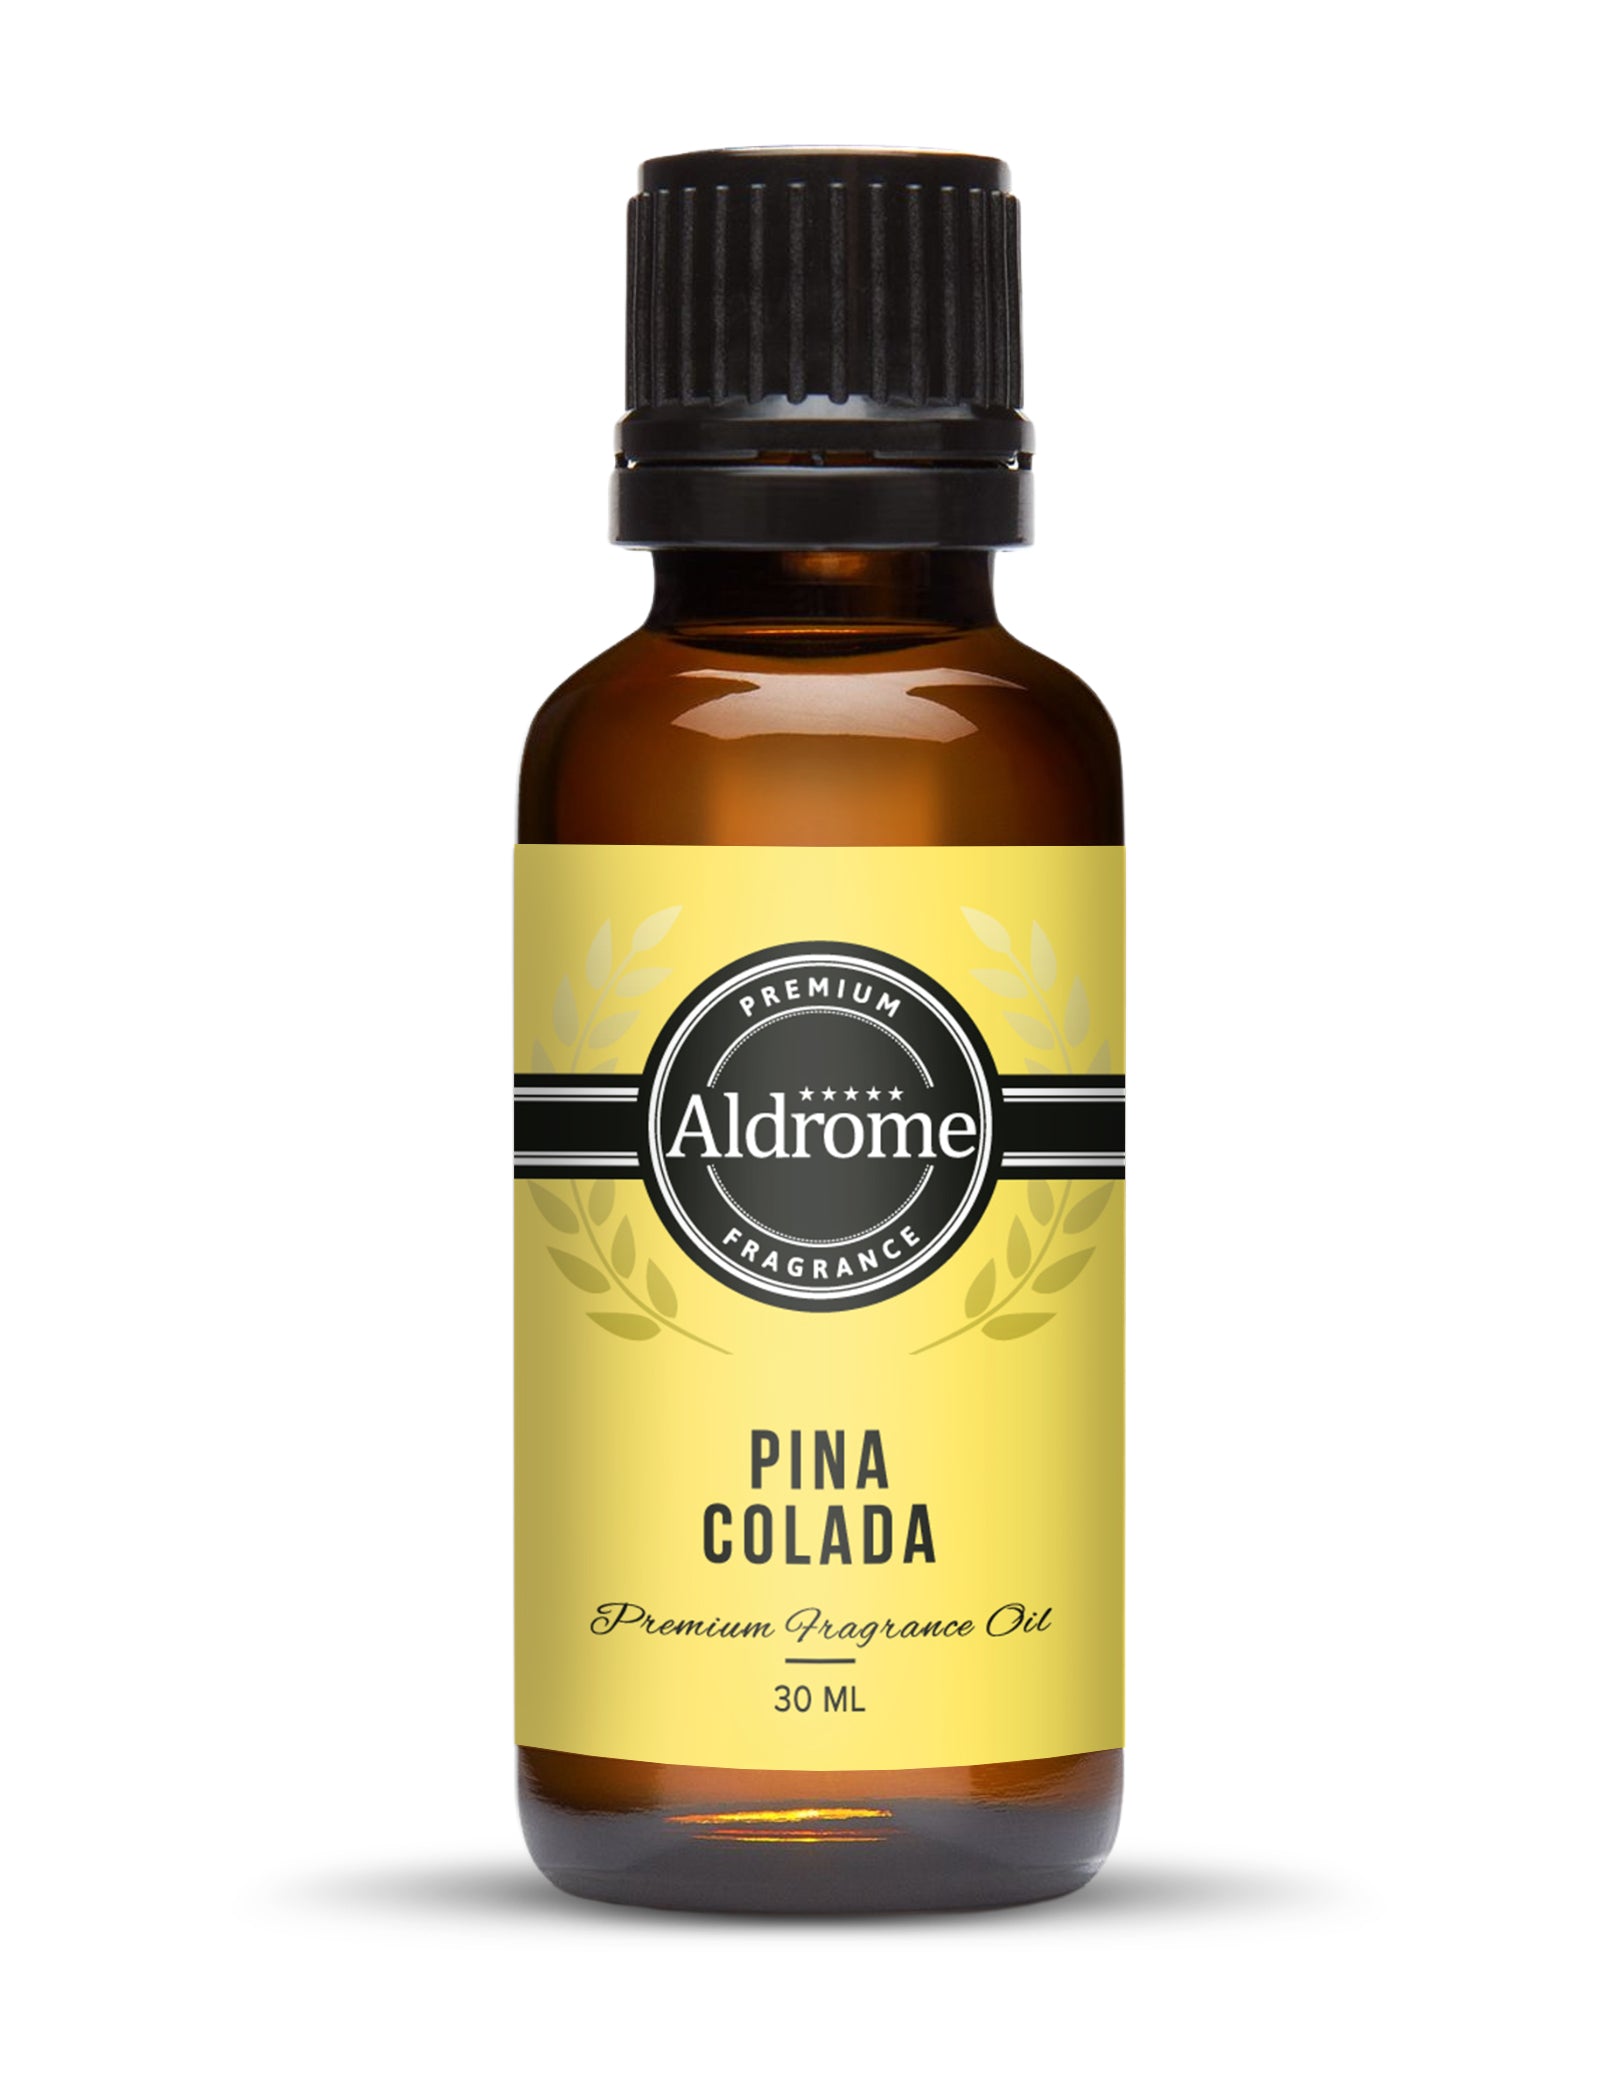 Pina colada Fragrance Oil - 30ml